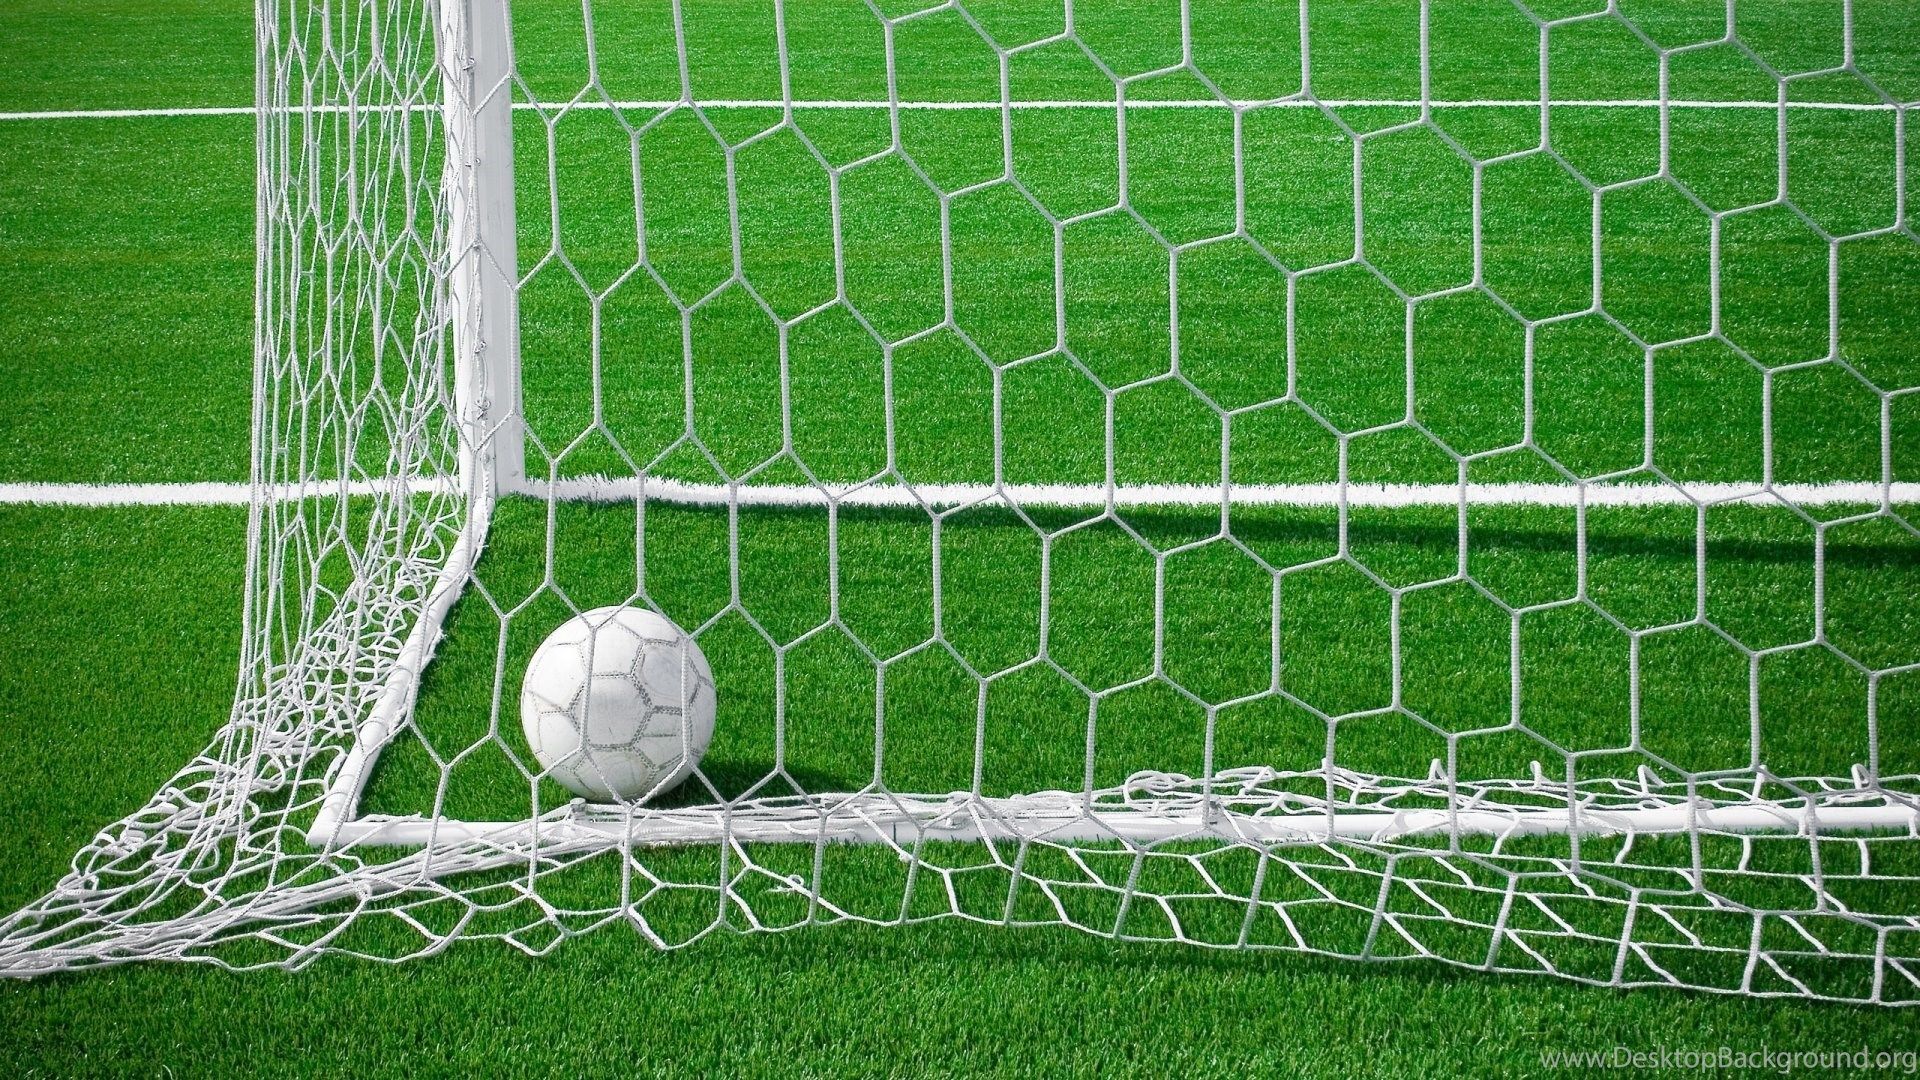 HD Soccer Goal Wallpaper PhotoJunction Desktop Background